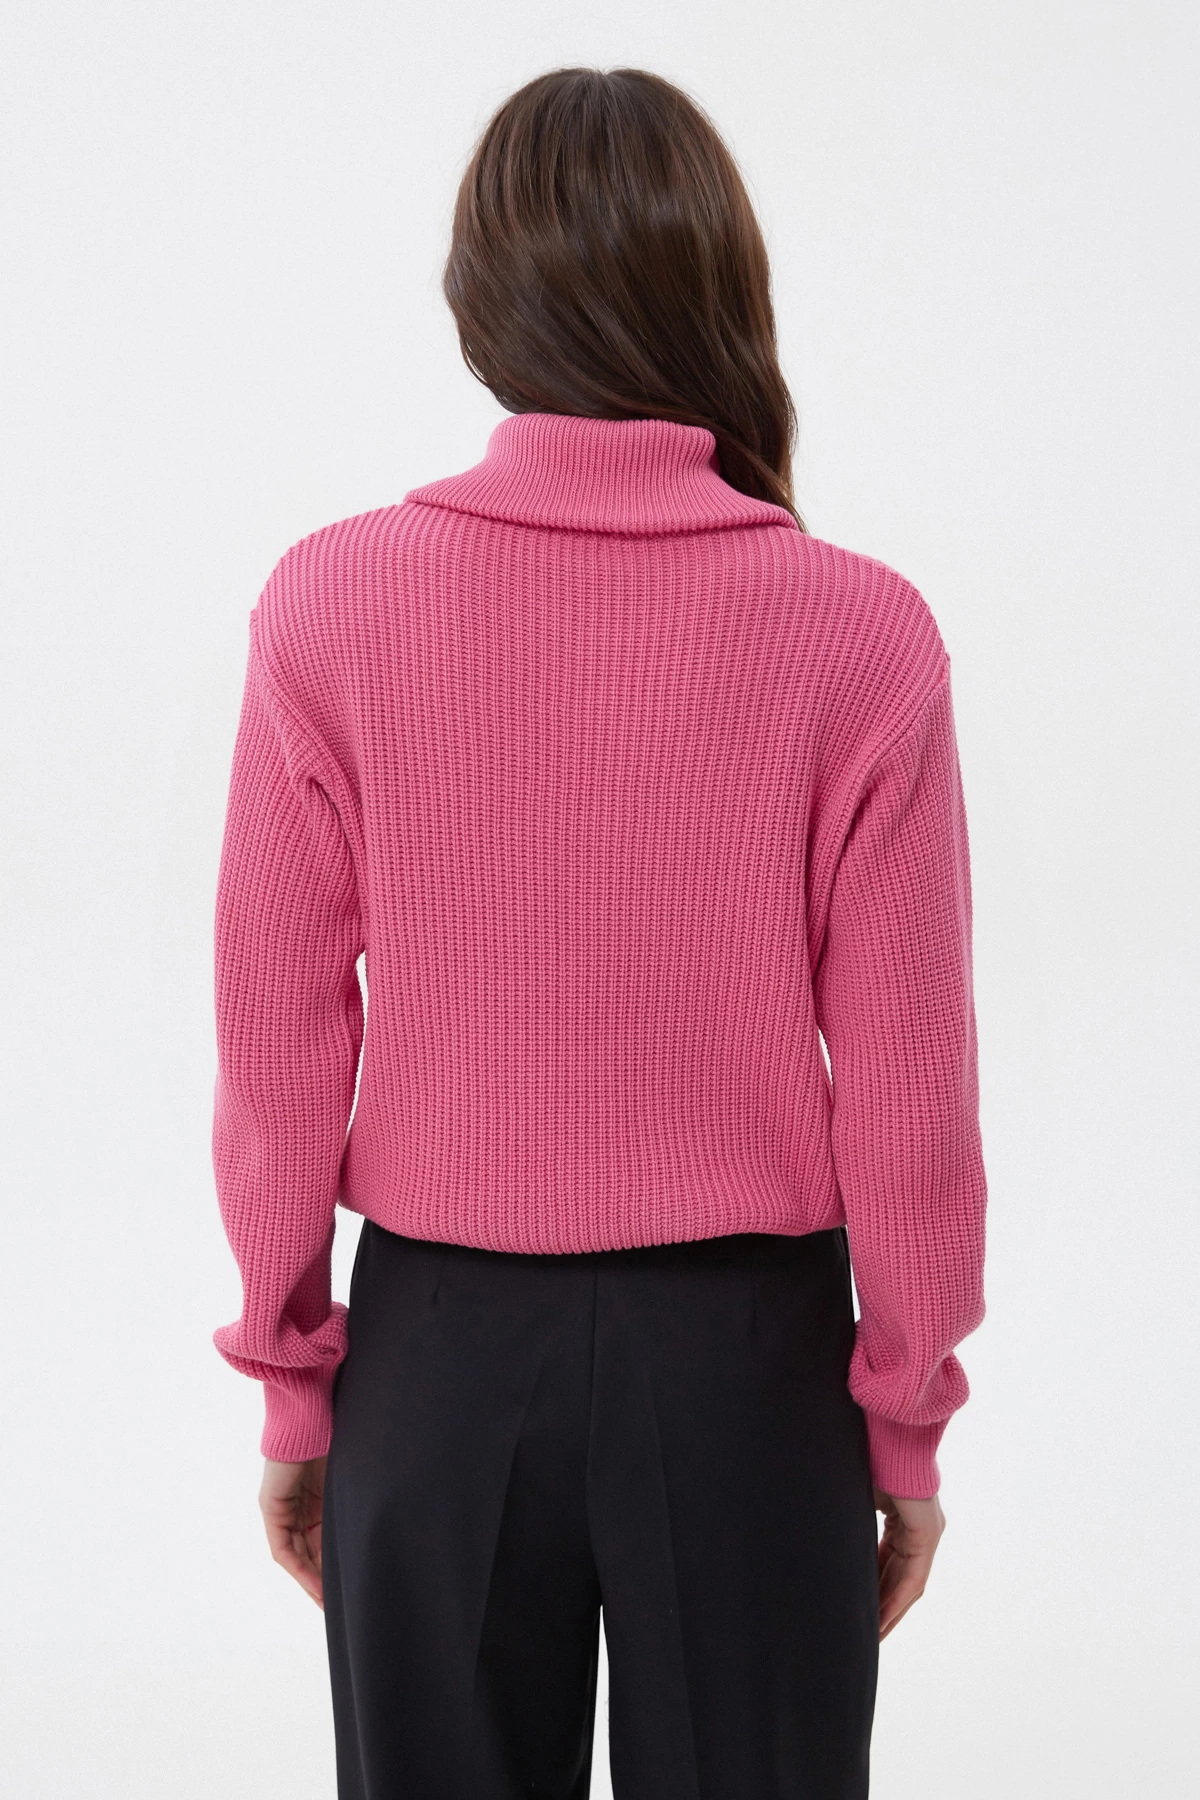 Pink cotton zip-up knit sweater, photo 4